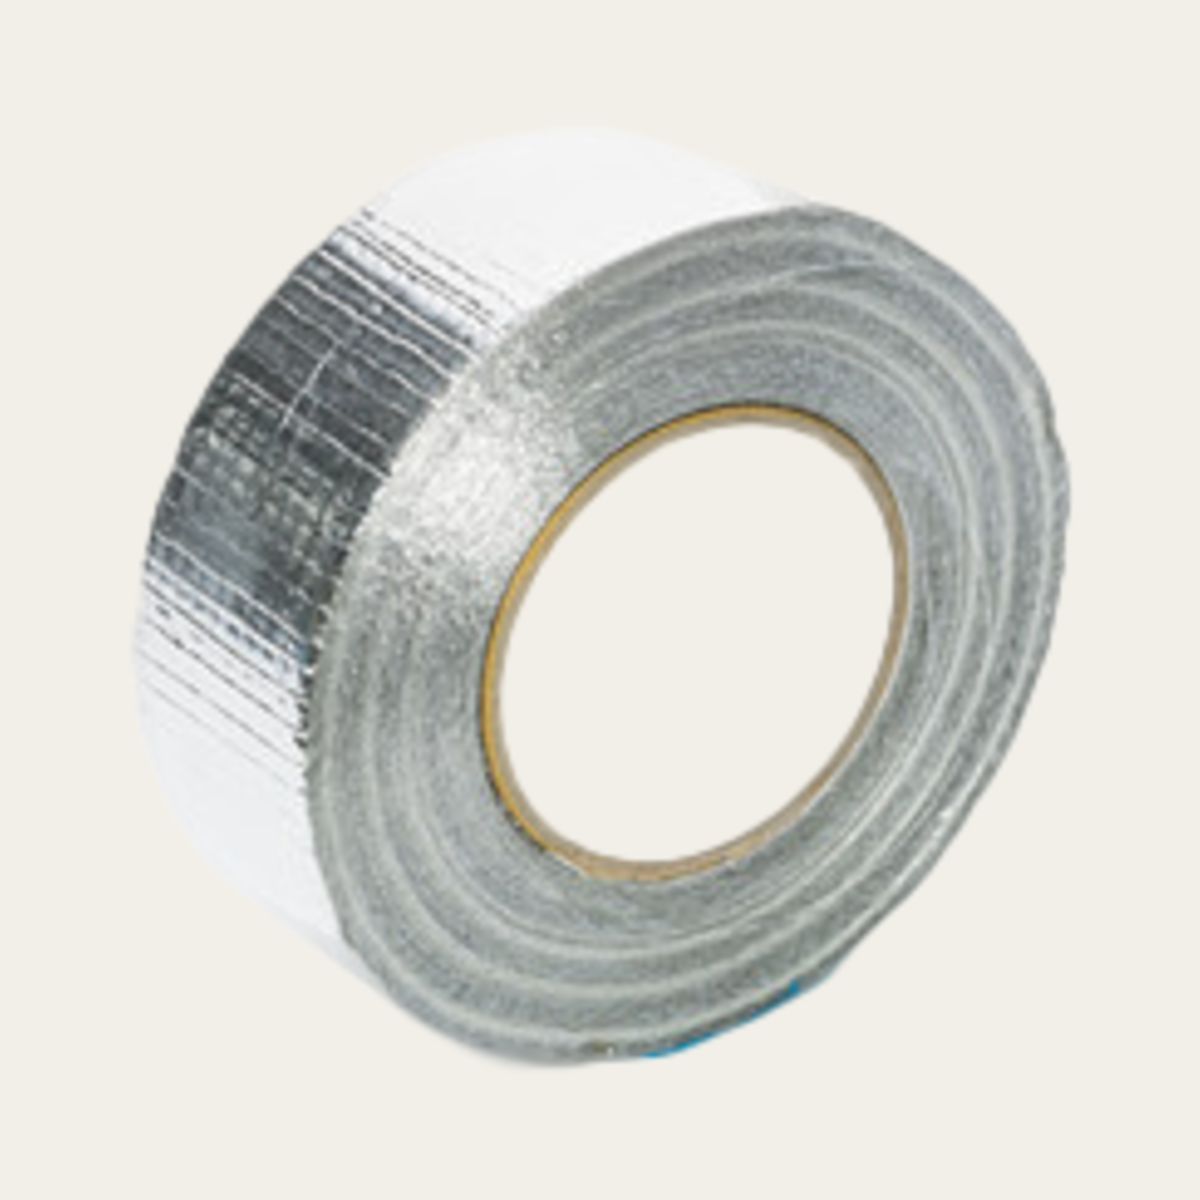 Aluminium insulation tape, 50 m roll, width 50 mm